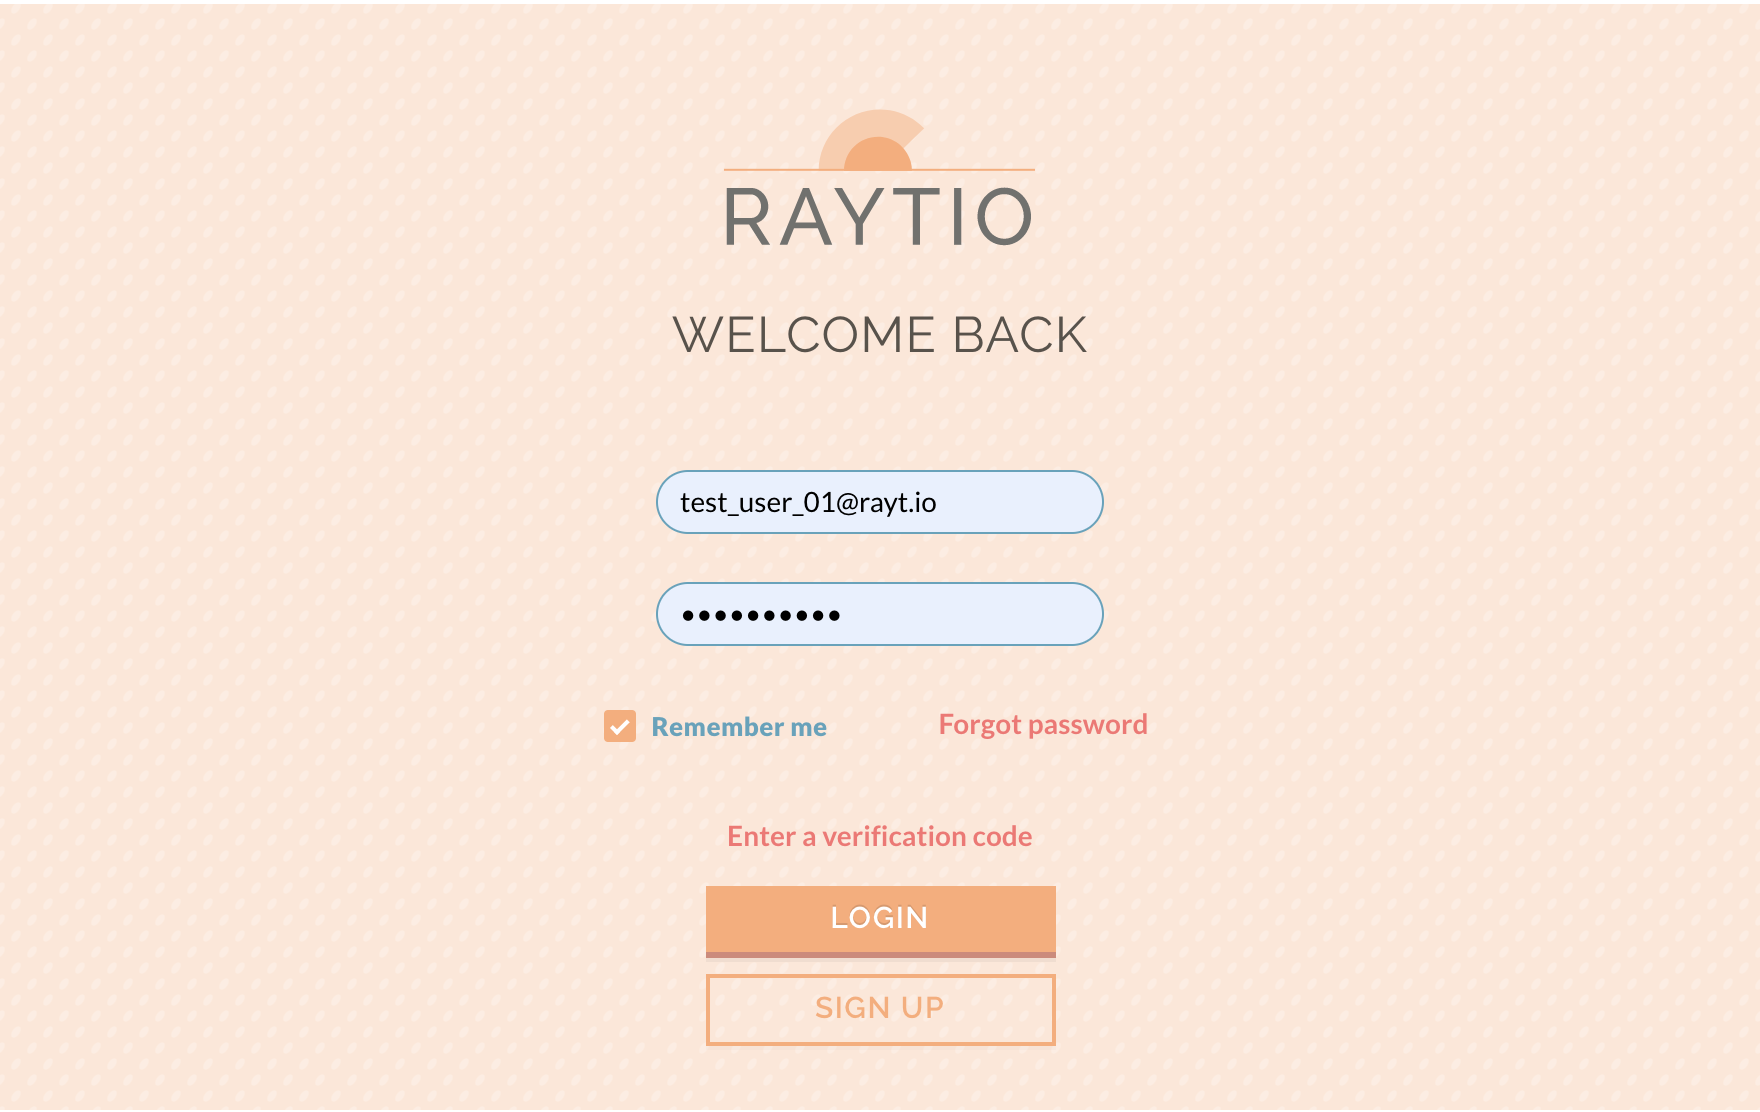 Image of the raytio login page